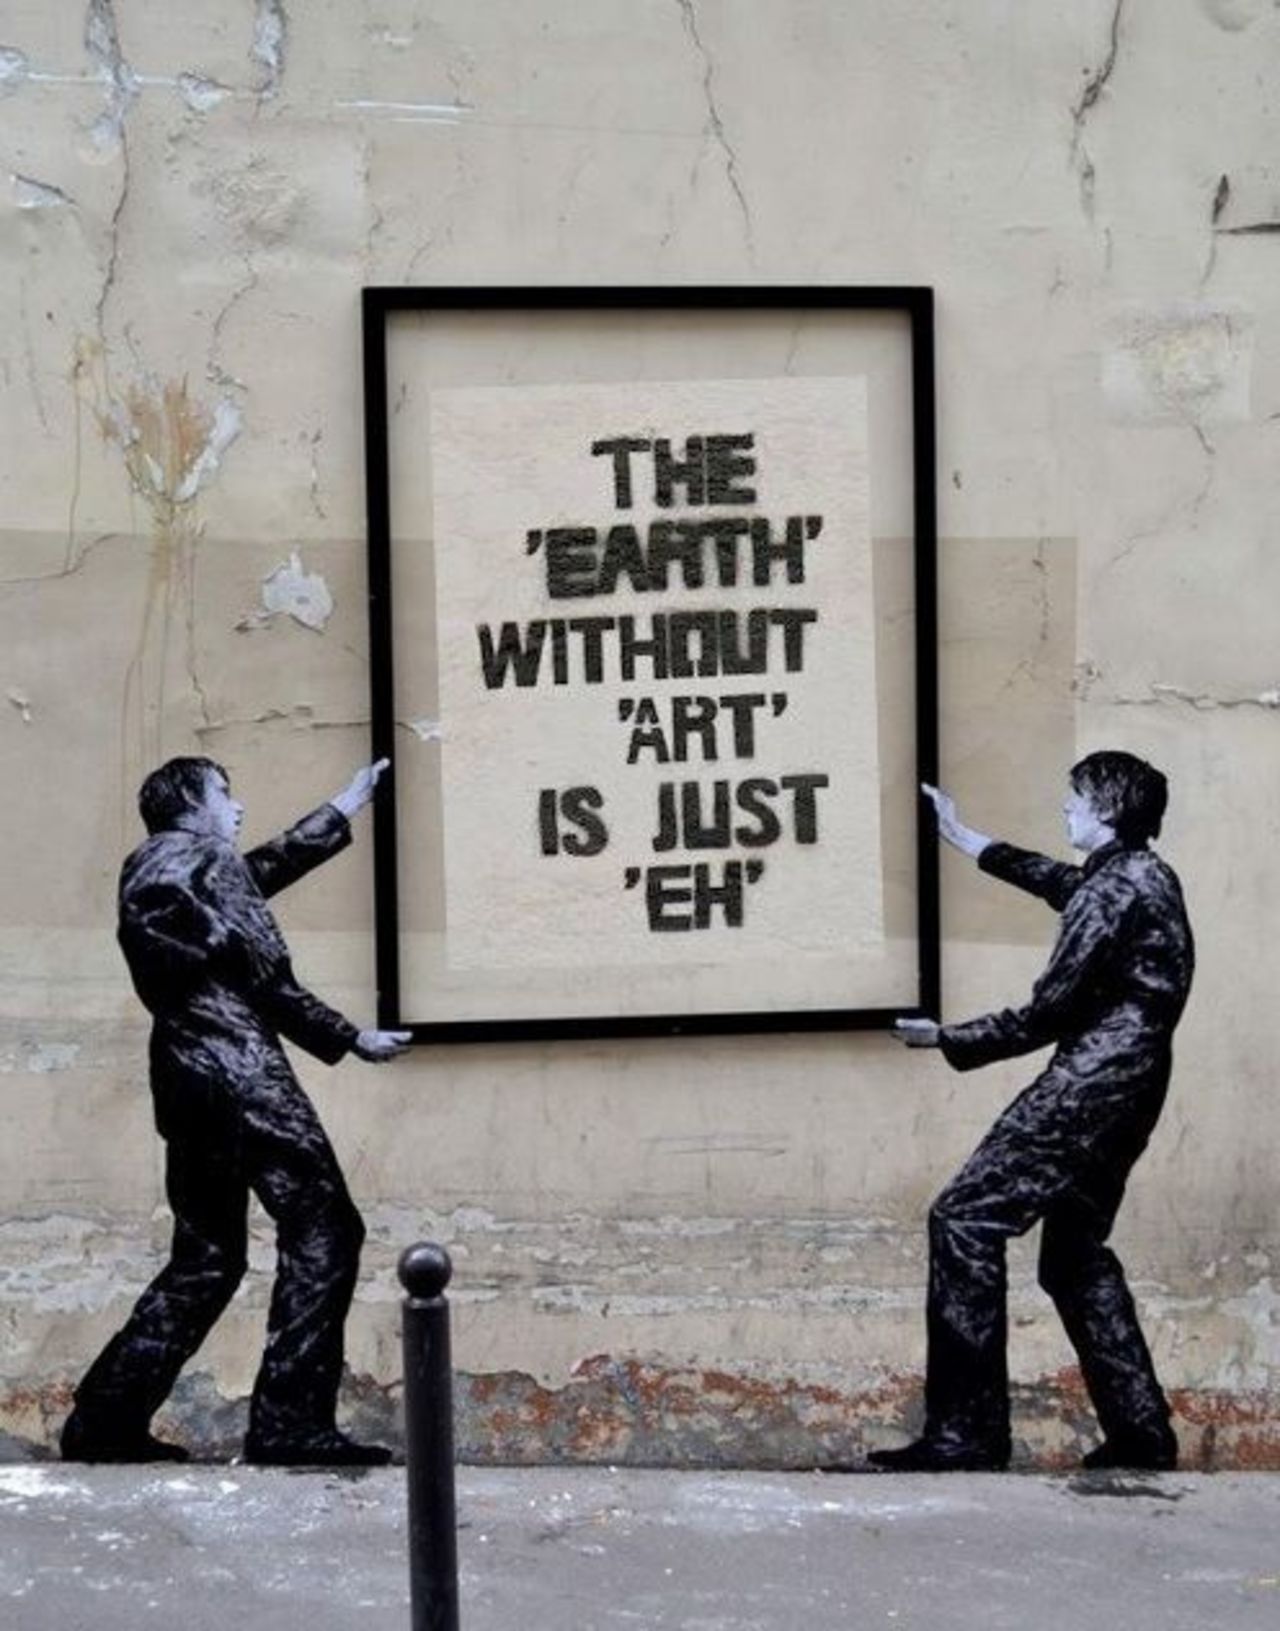 " The 'Earth' Without 'Art' is Just 'Eh' "Banksy#streetart #urbanart #graffiti #stencil https://t.co/JdhYAPH126